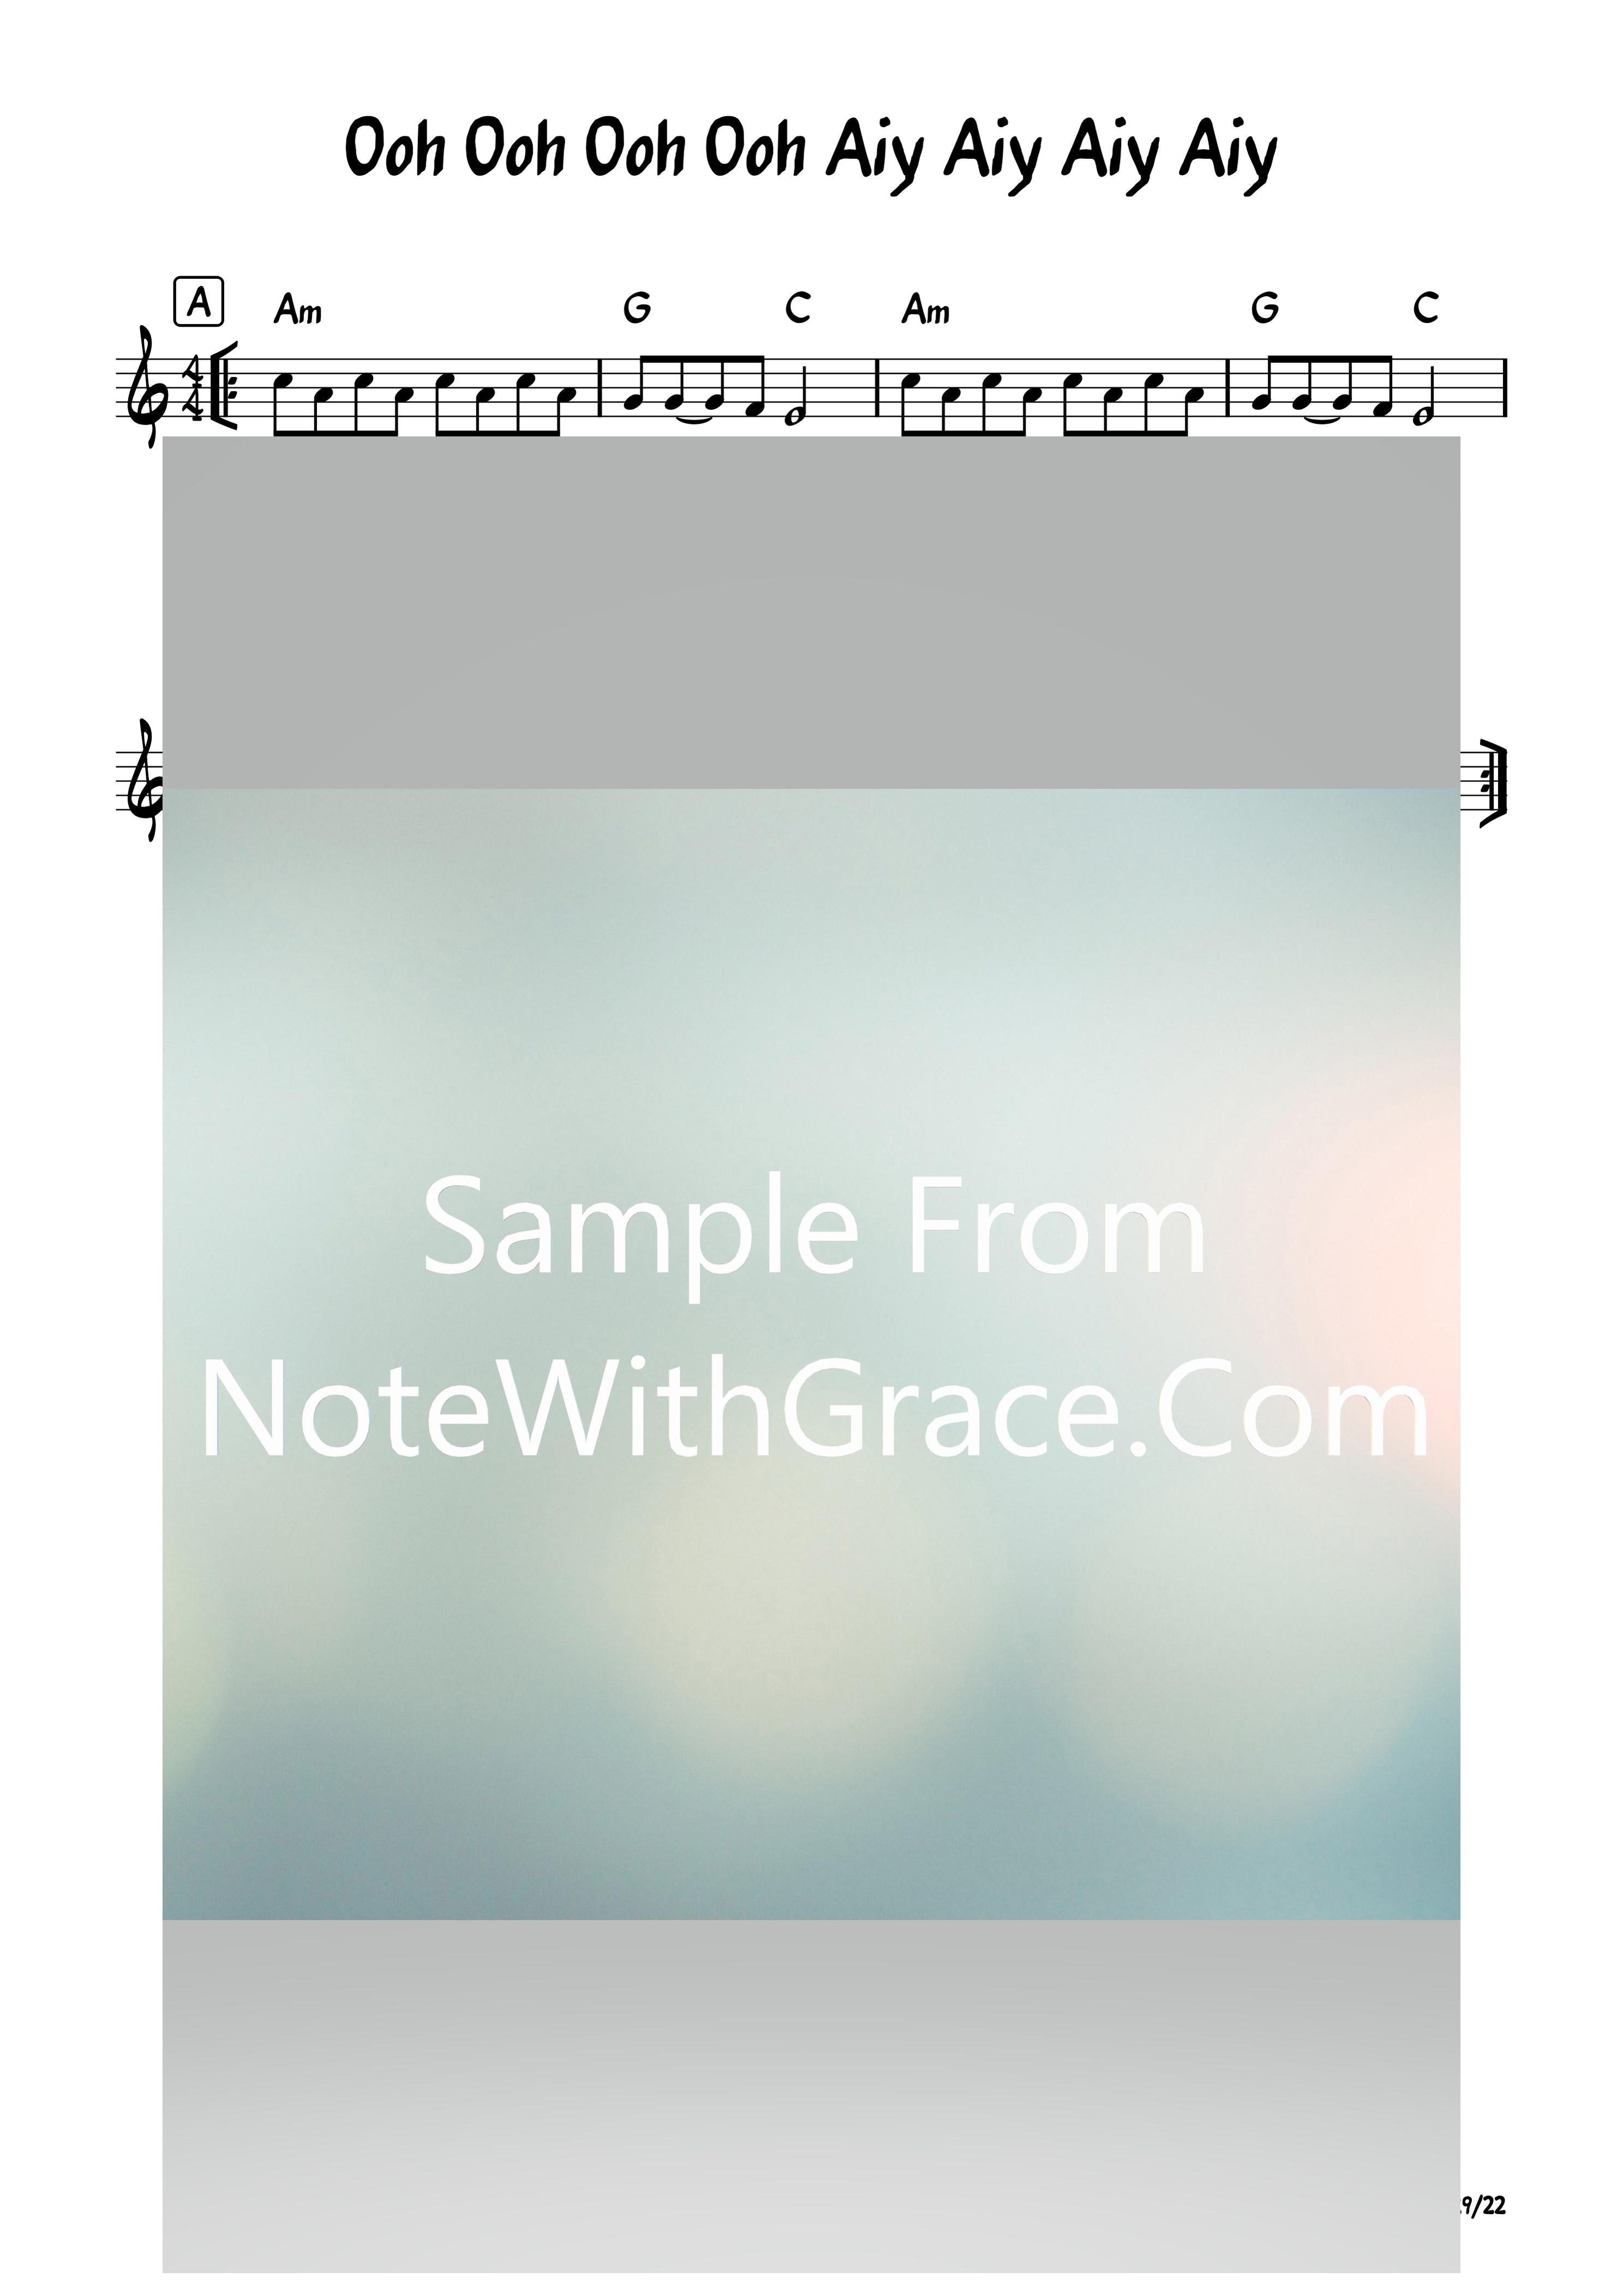 Ooh Aiy yaiy yaiy yaiy Lead Sheet (World)-Sheet music-NoteWithGrace.com